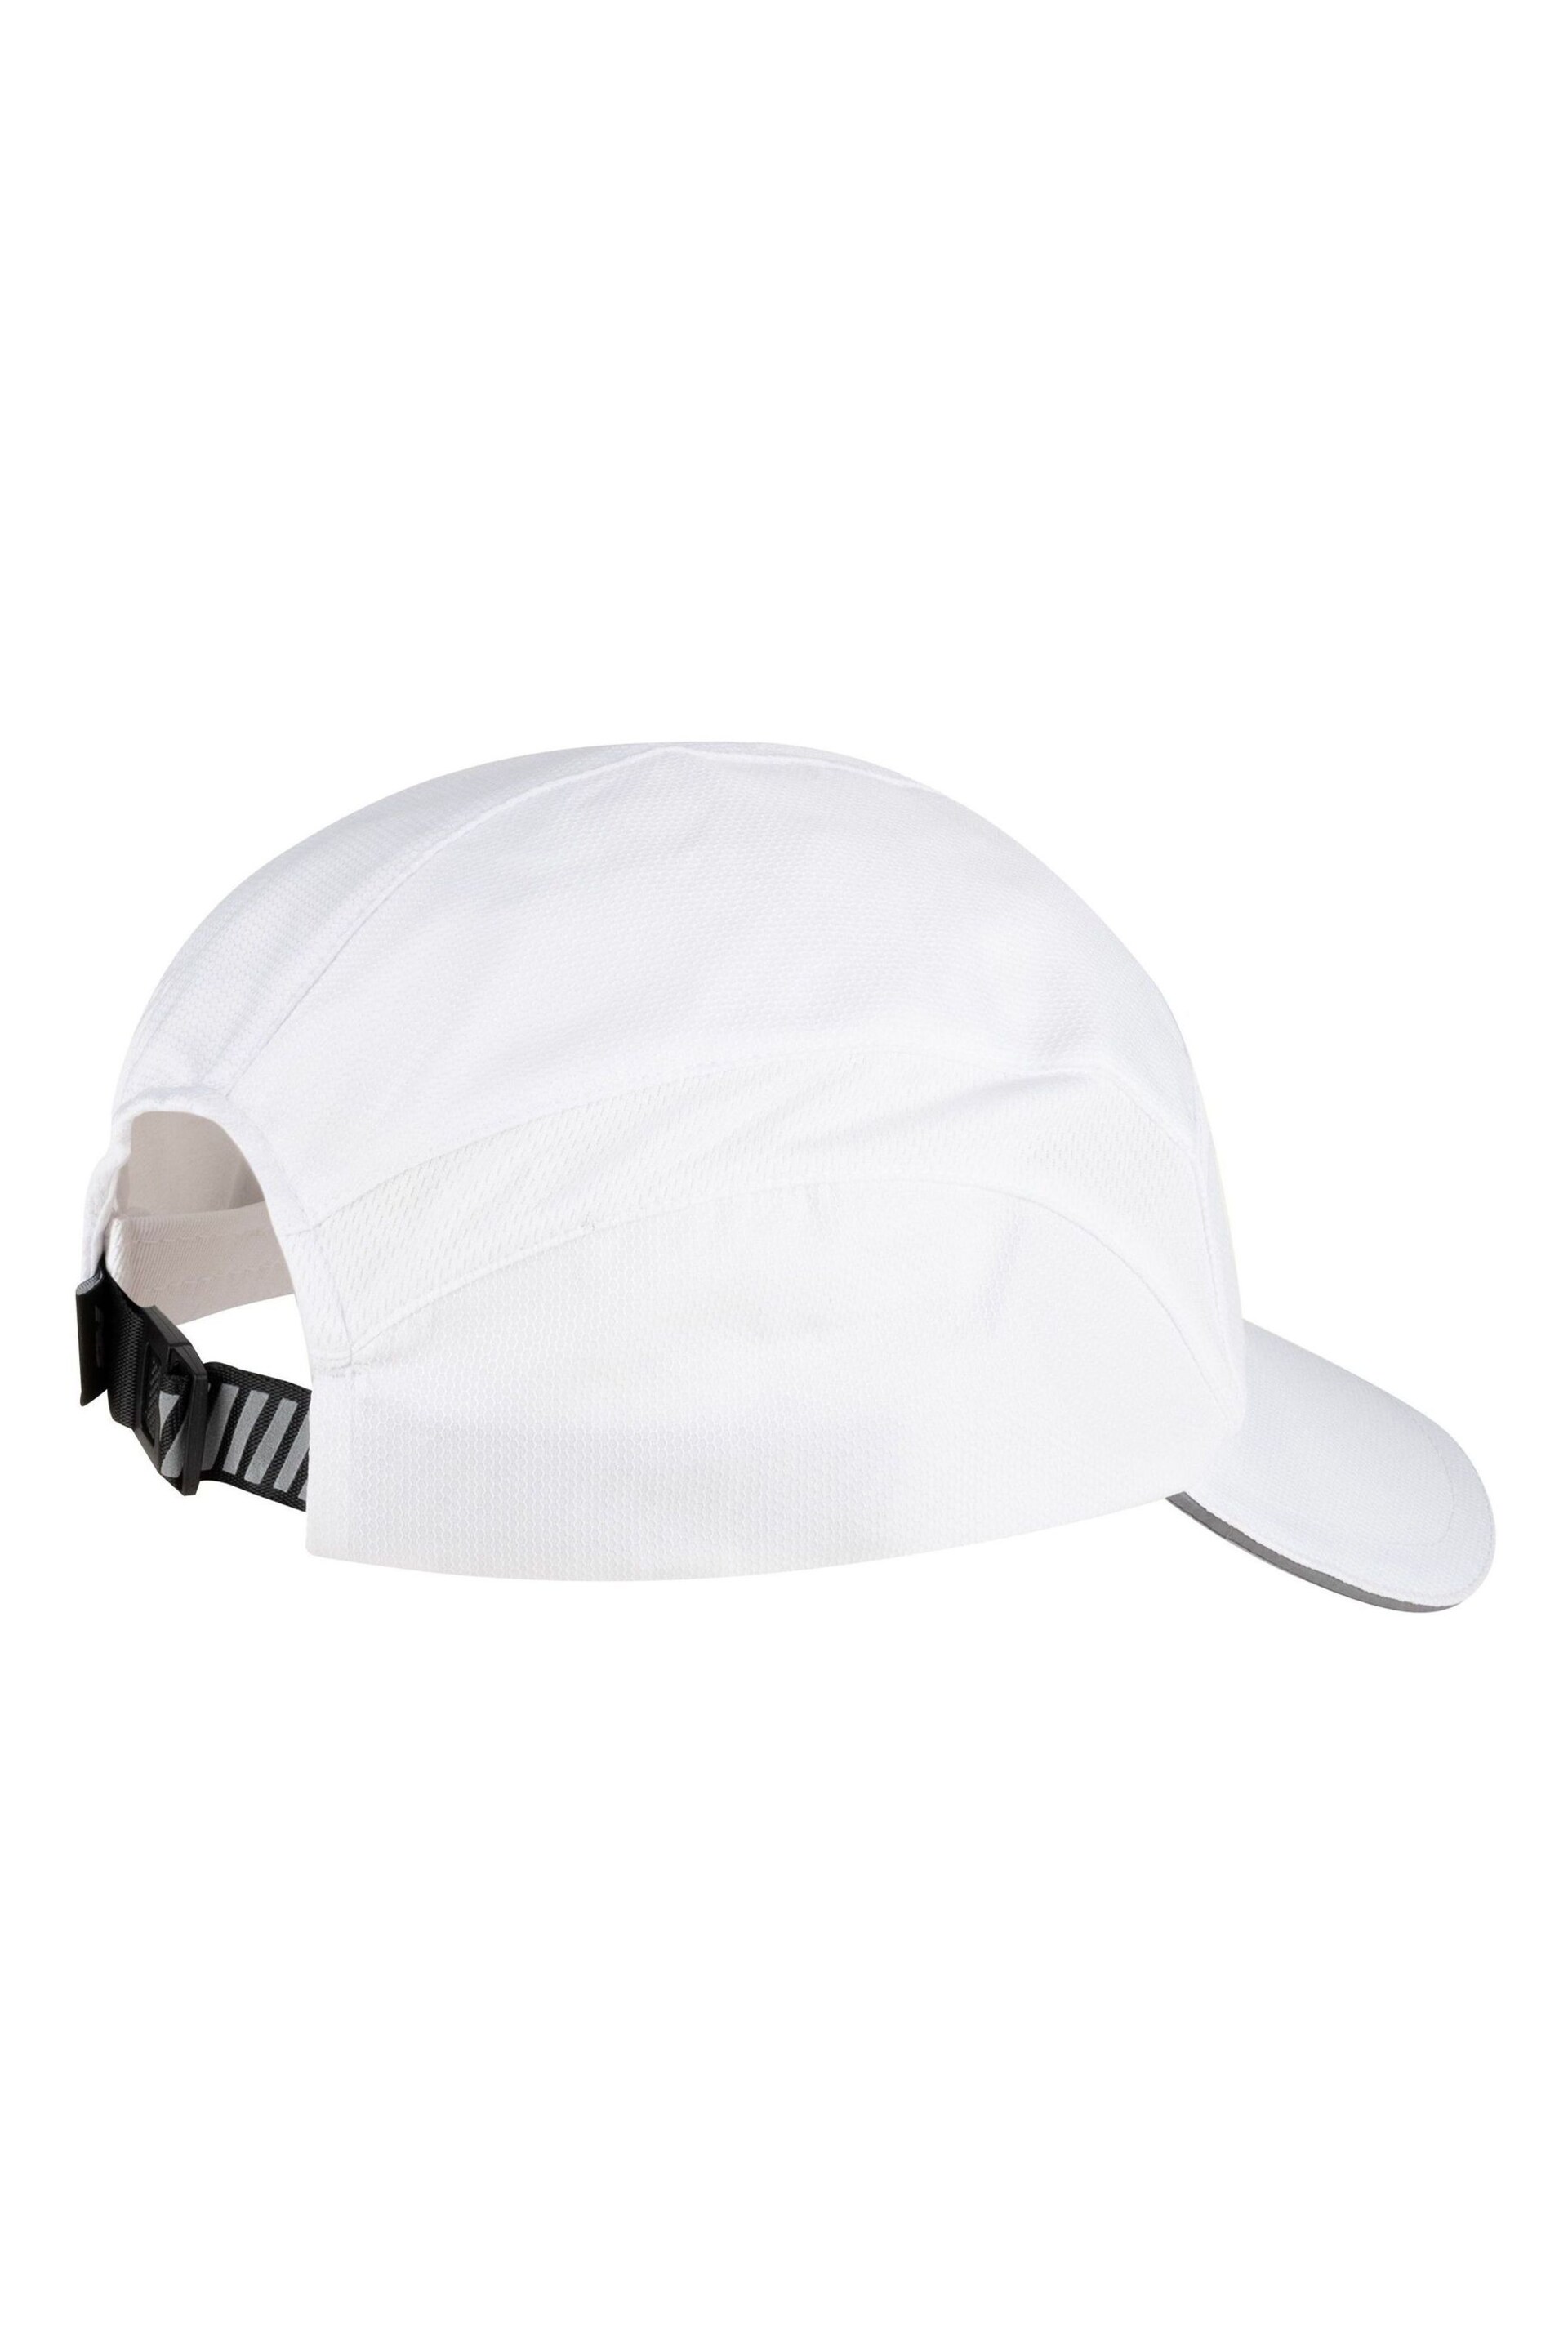 New Balance White 5-Panel Performance Hat - Image 2 of 3